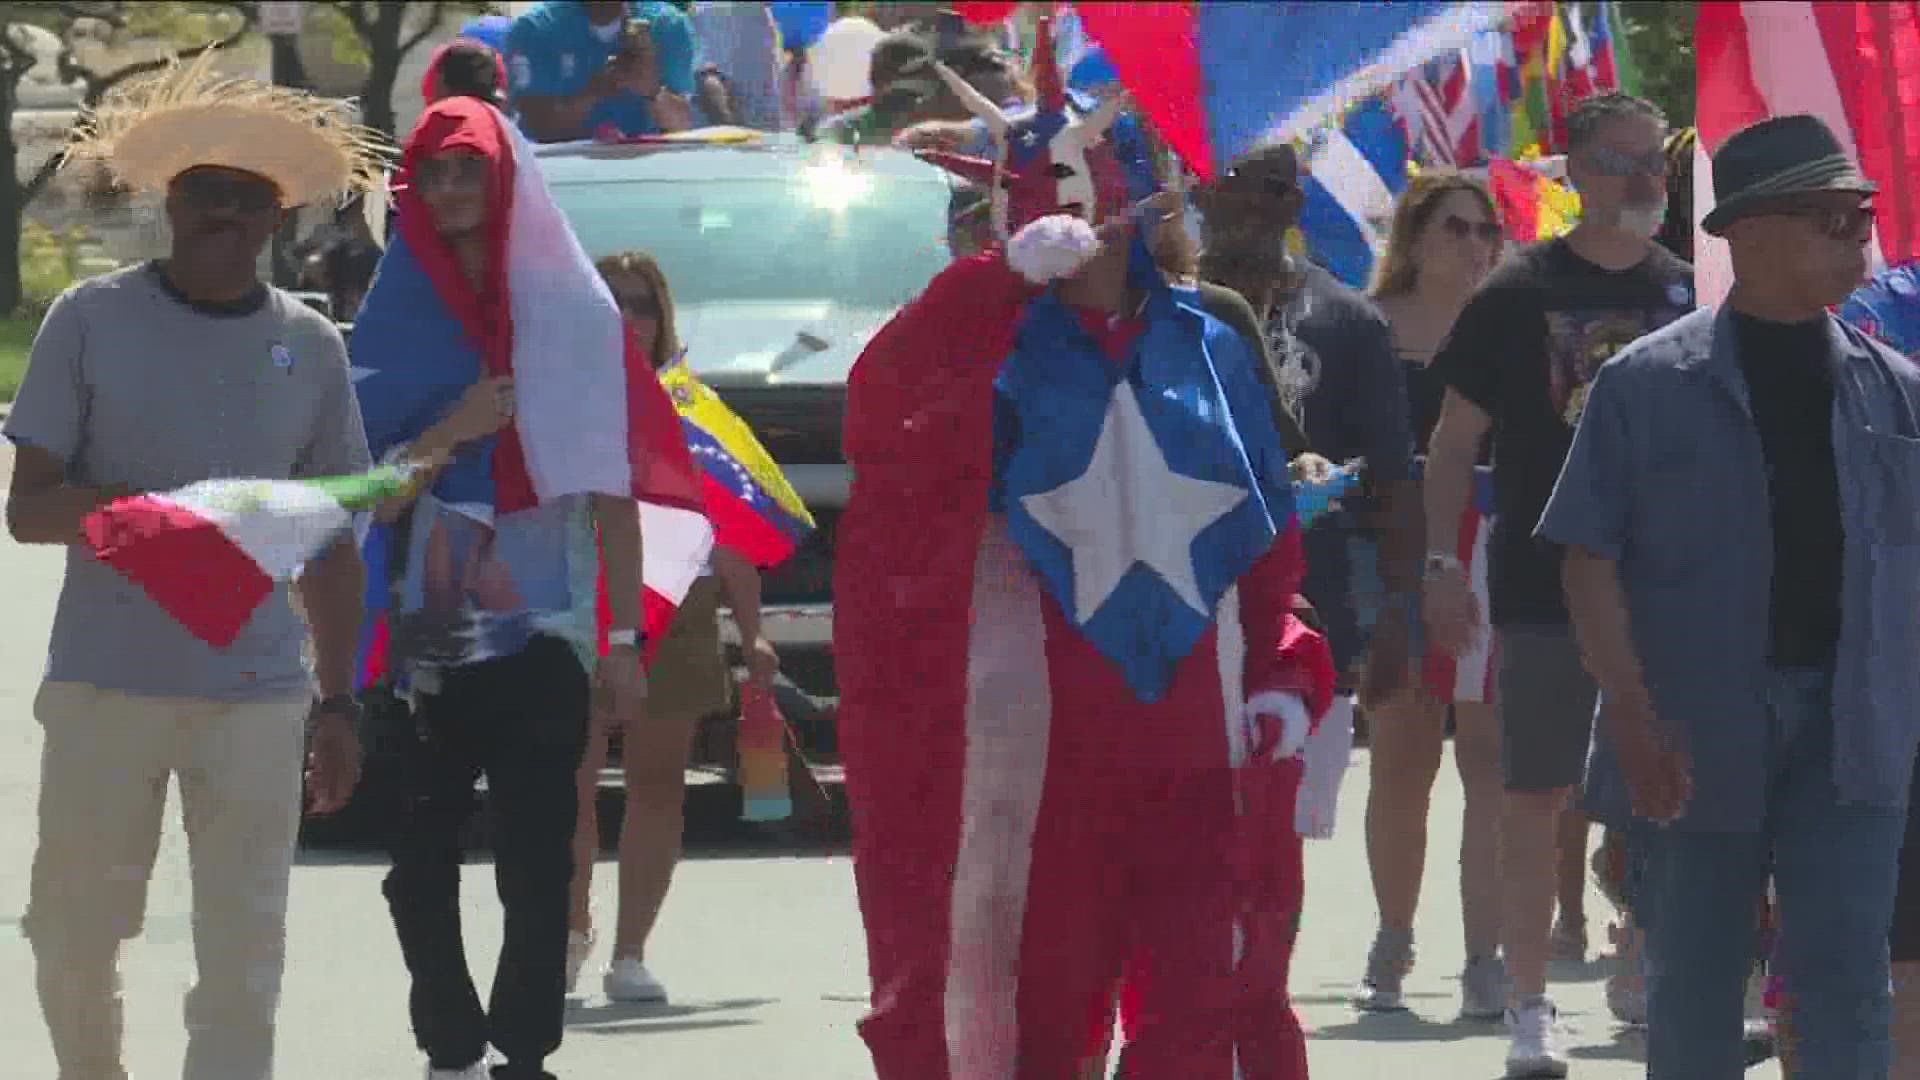 On Saturday, Buffalo's Hispanic community will celebrate the 20th annual Puerto Rico and Hispanic Day Parade.